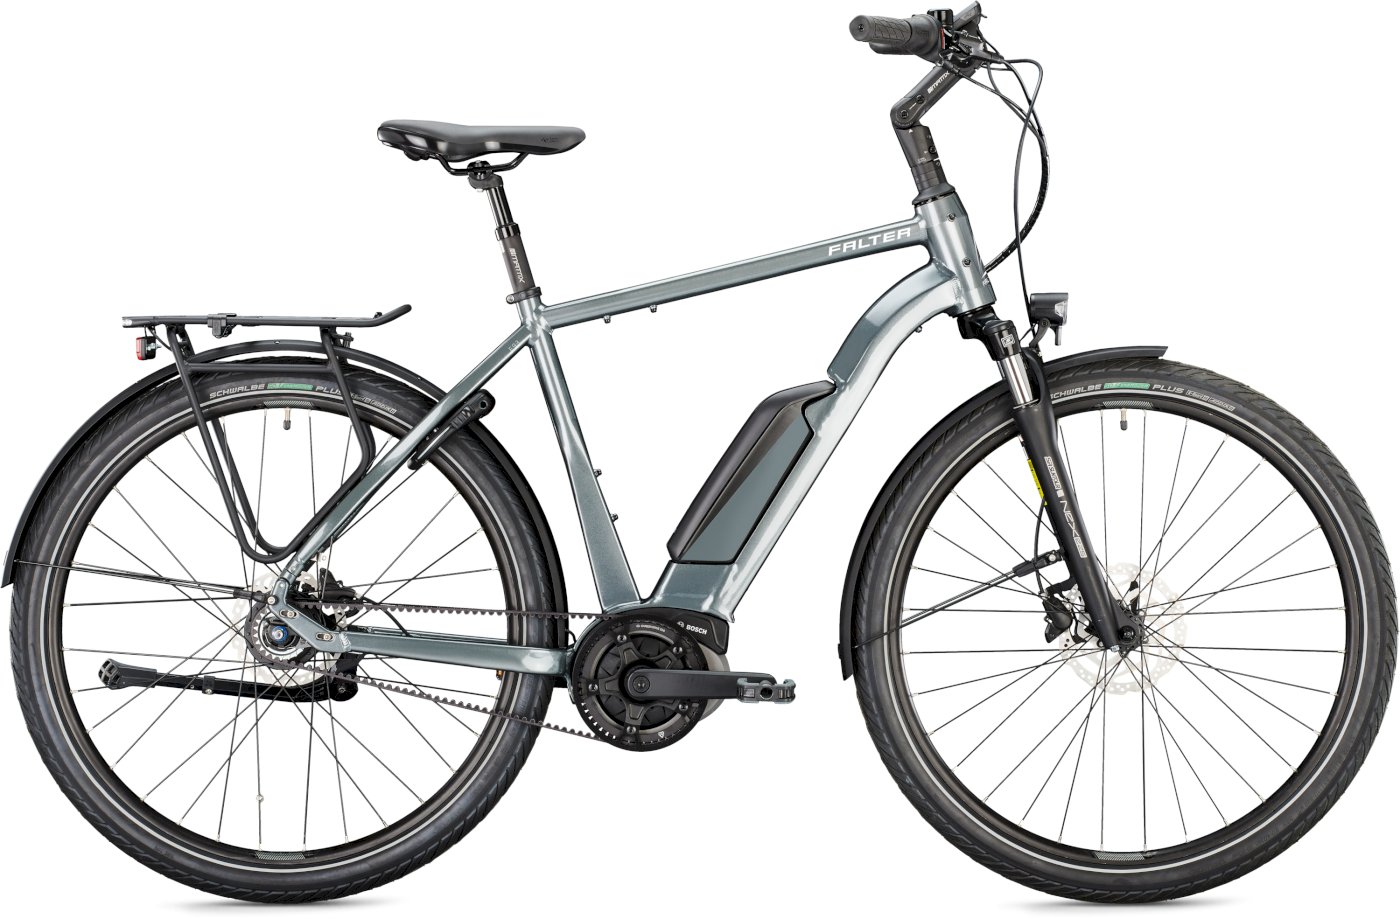 Falter E-Bike E 9.3 traffic grey 28 Zoll Diamant 50 cm Rücktrittbremse ohne Tracker